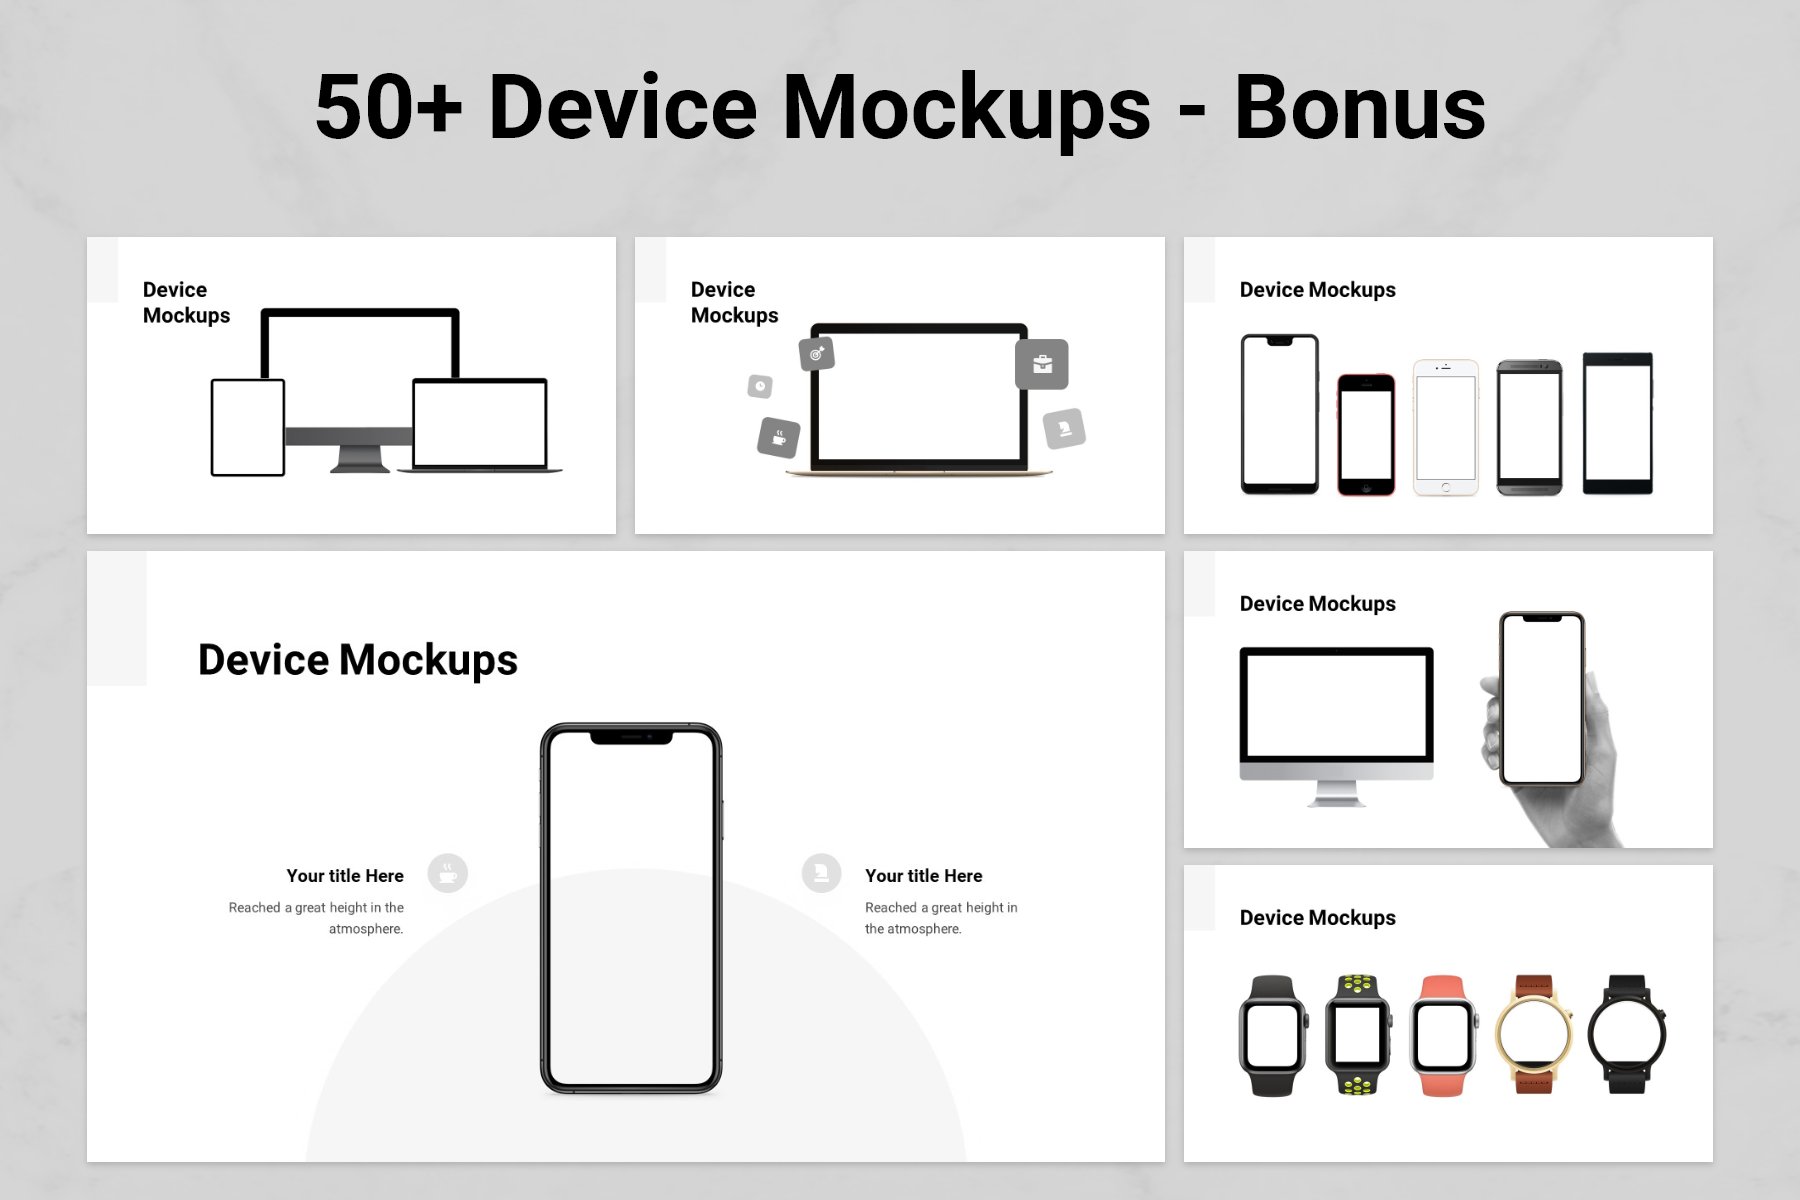 Device mockups such as bonus.